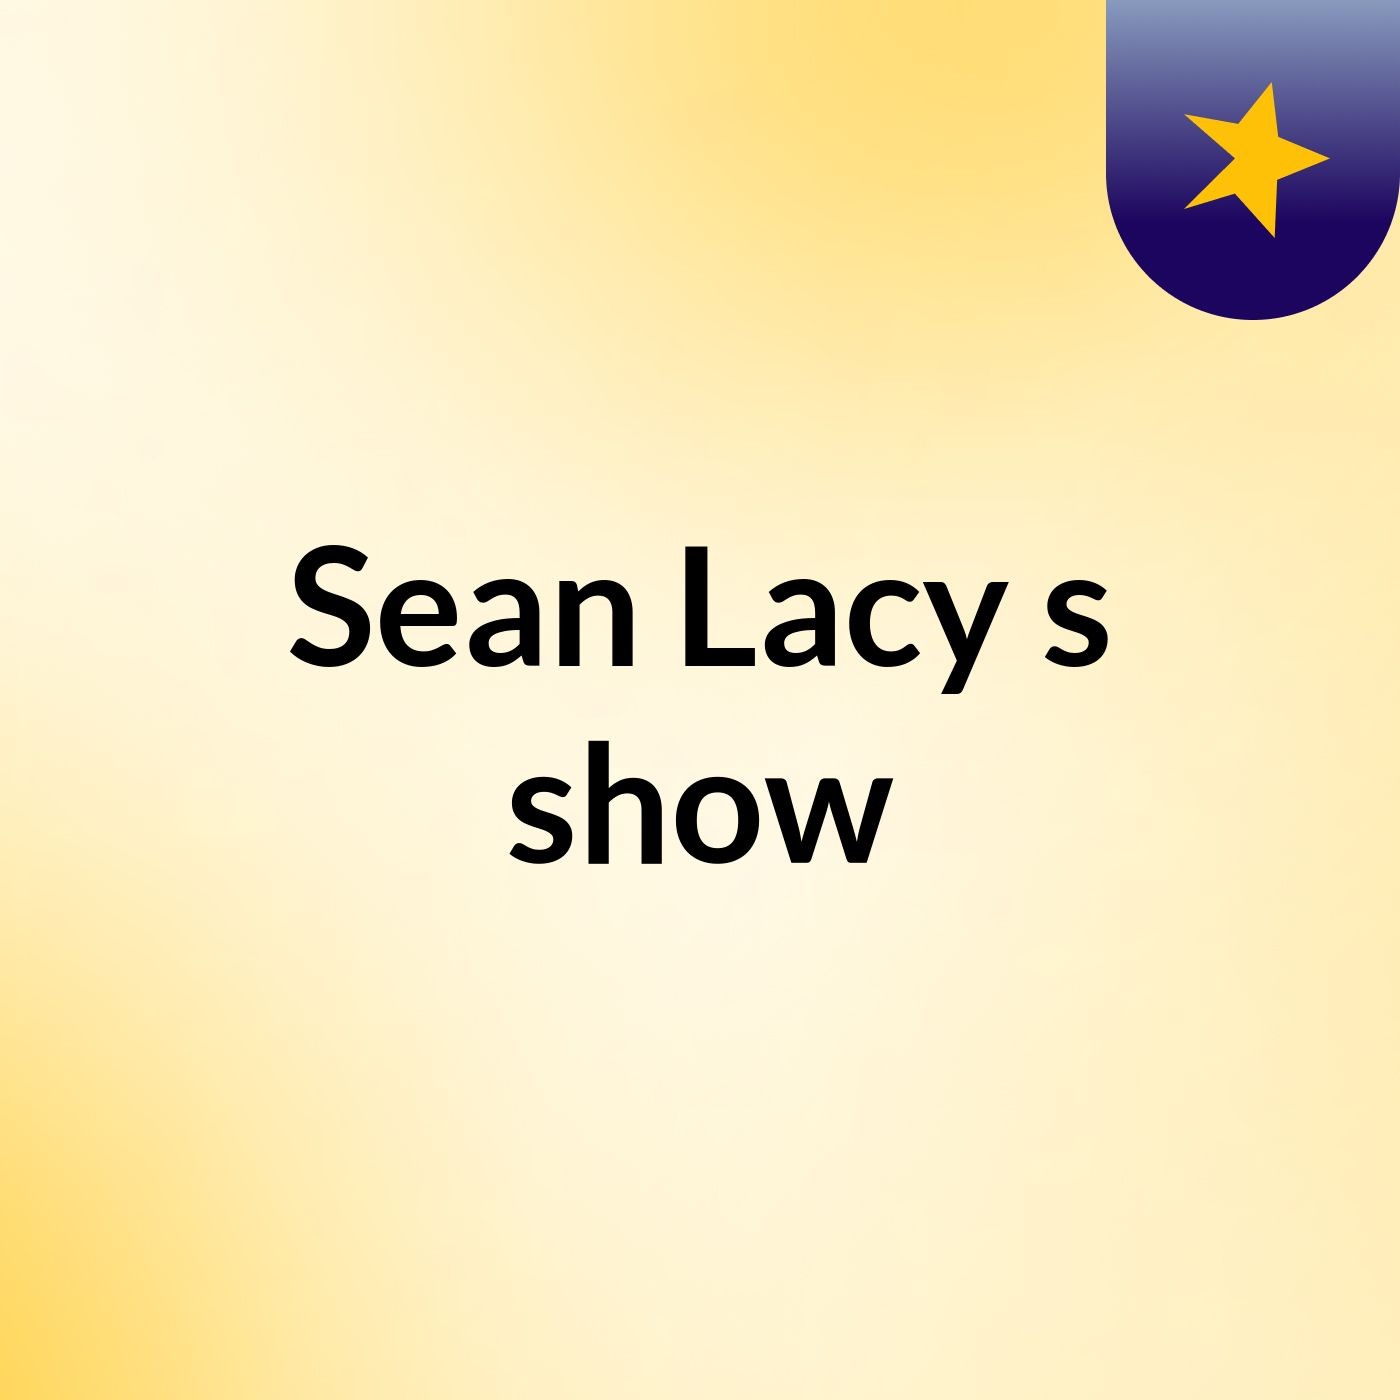 Sean Lacy's show